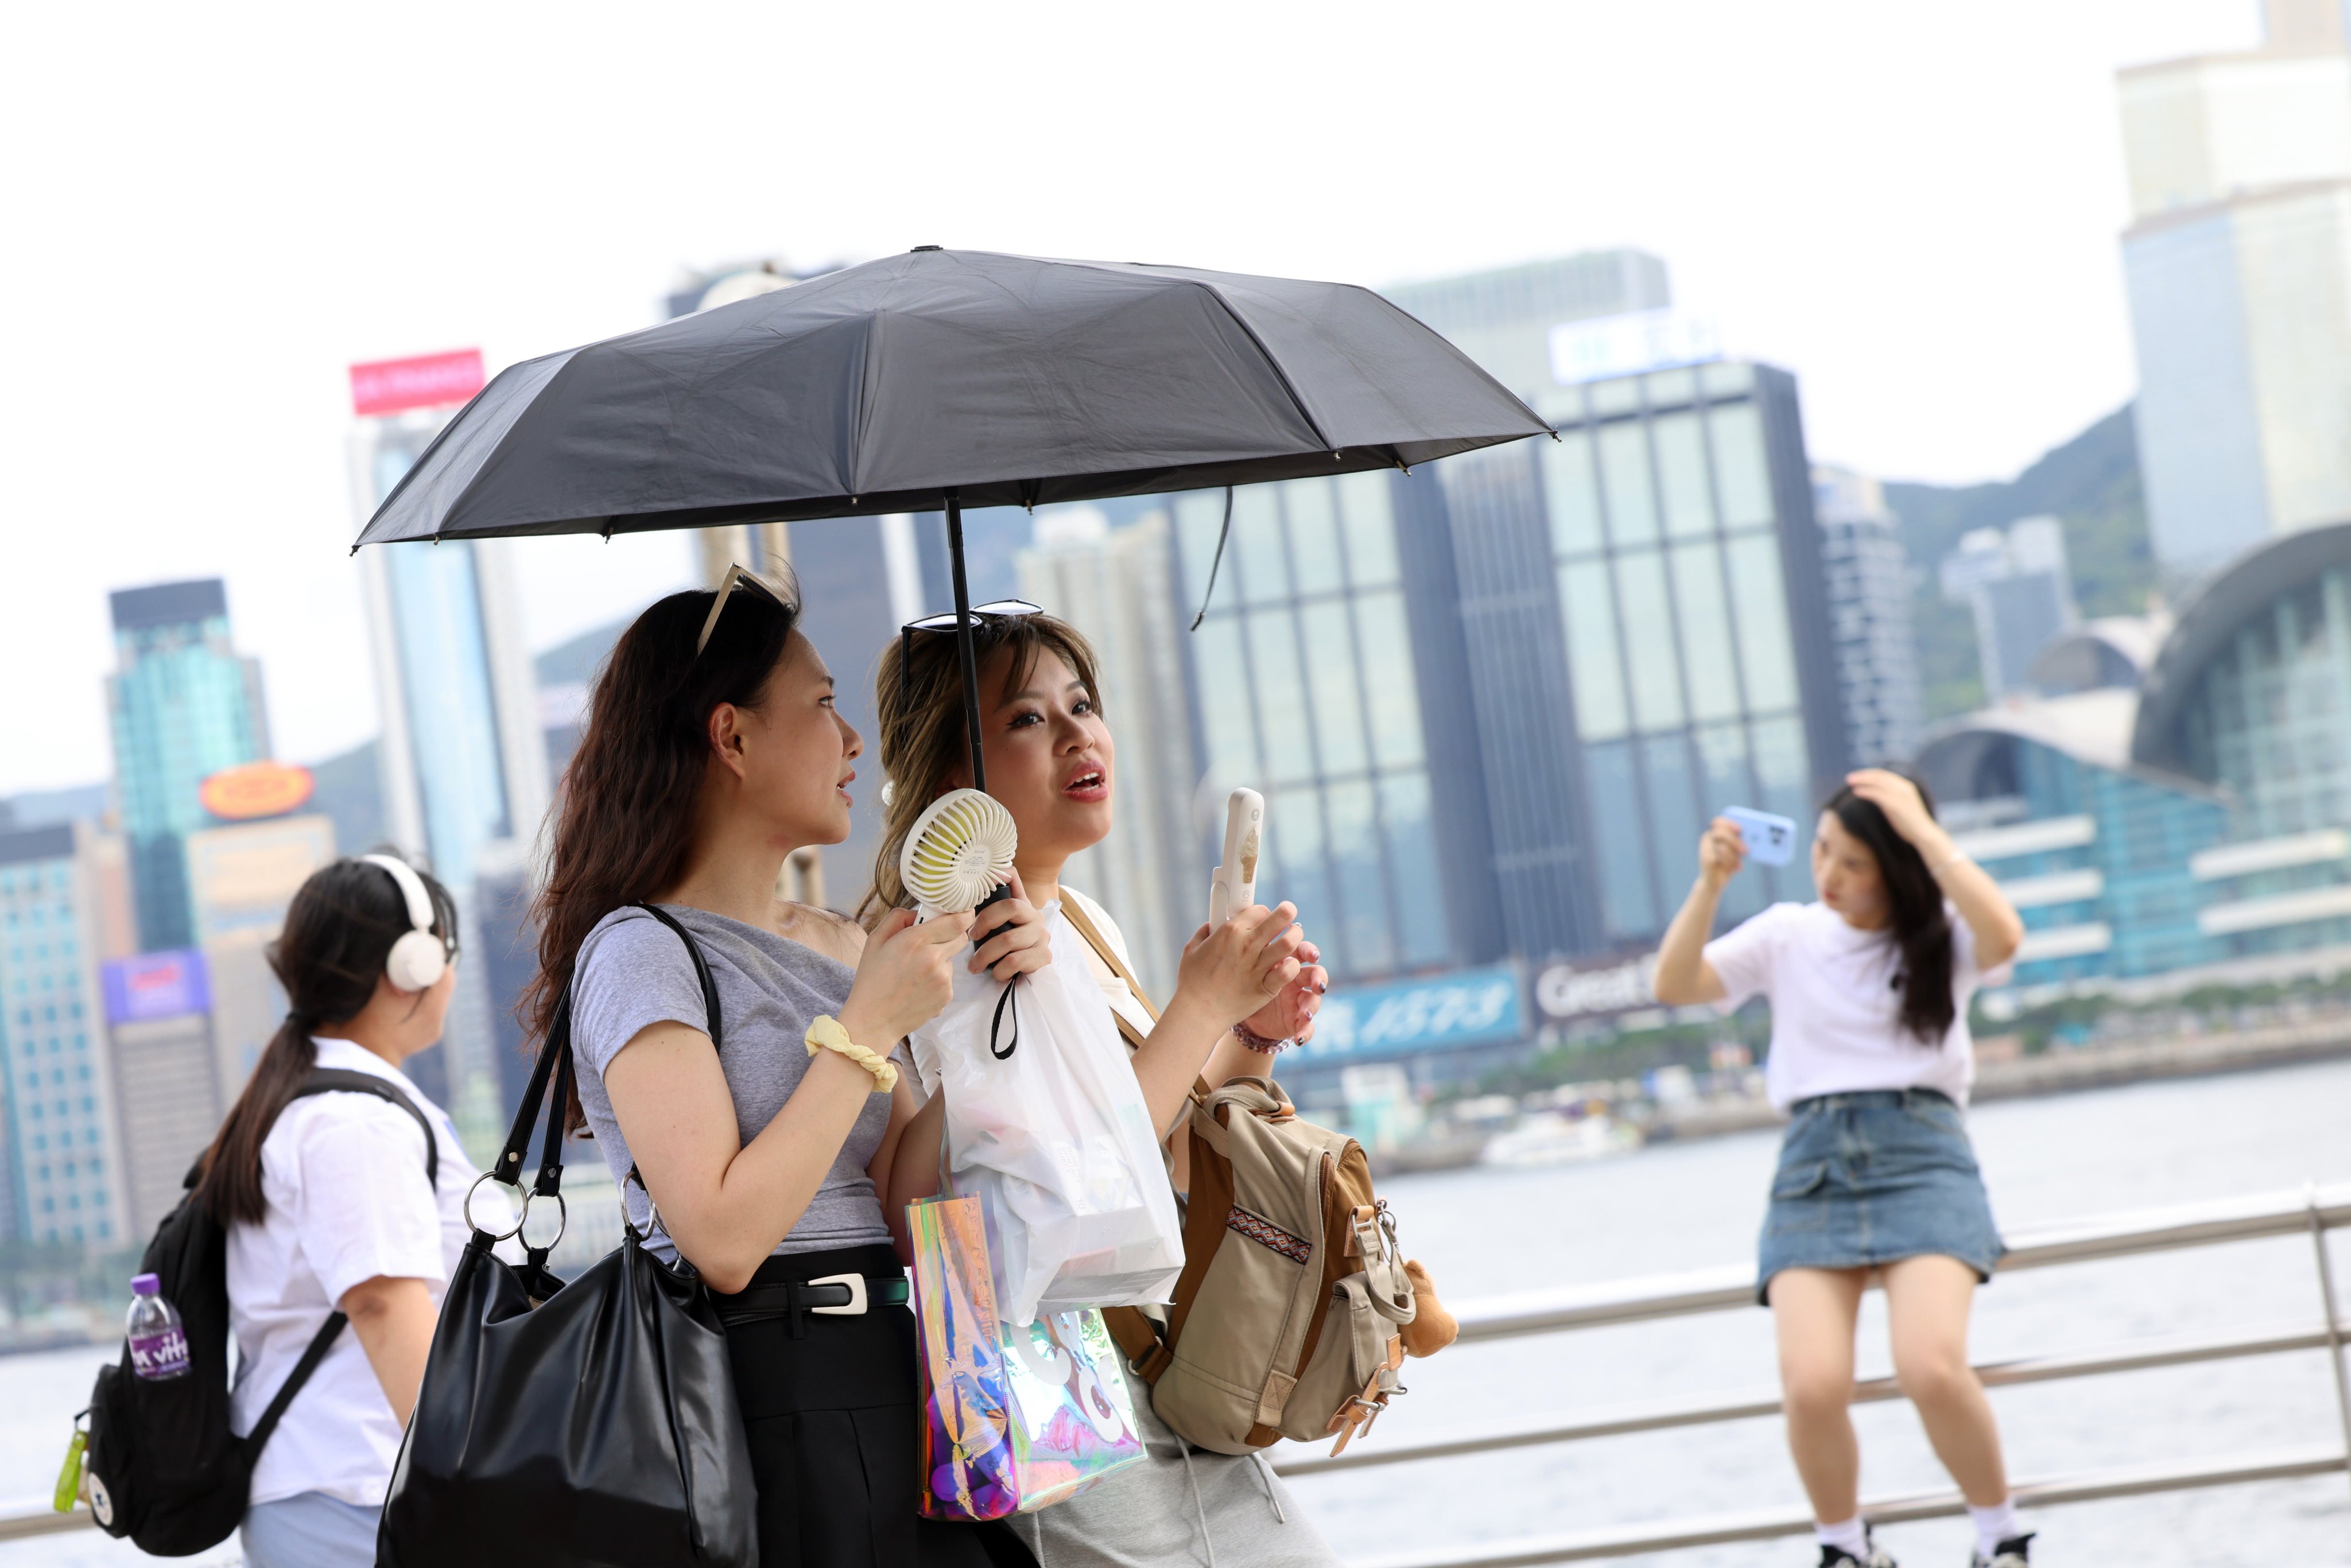 Tourists visit the Tsim Sha Tsui waterfront amid Thursday’s hot weather. Photo: Jelly Tse